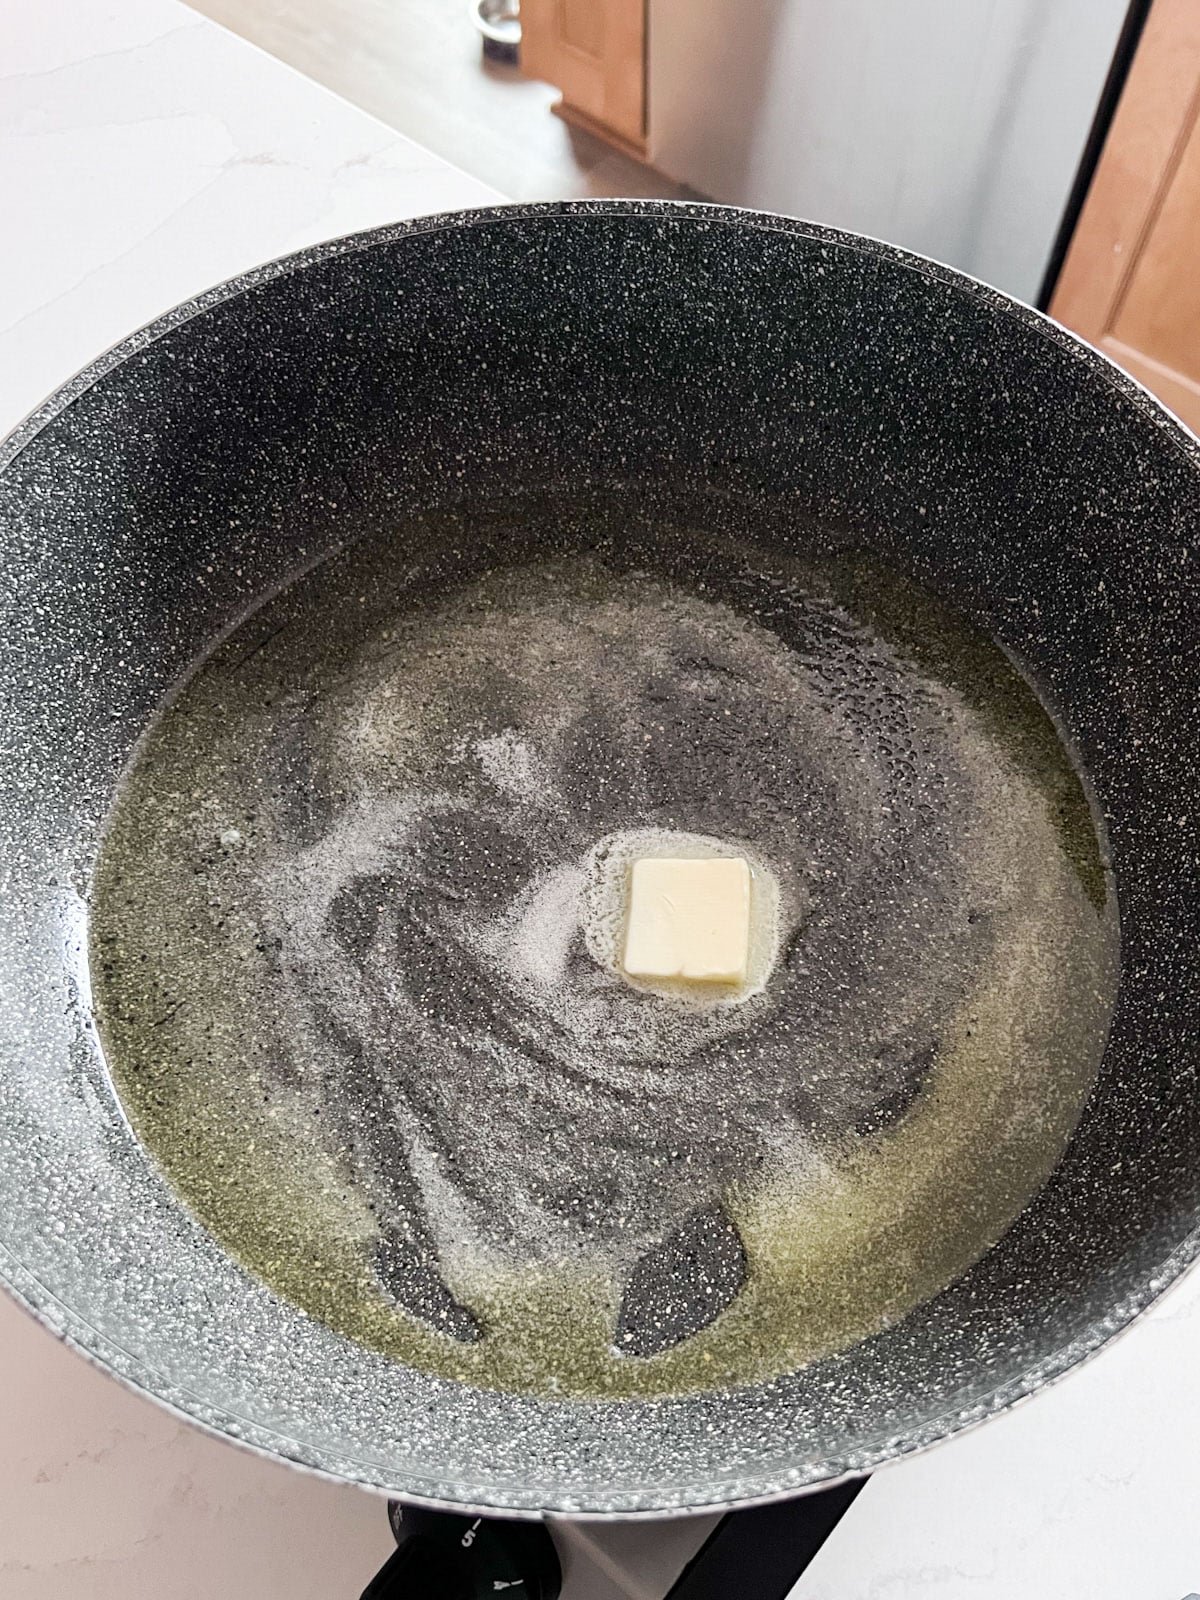 Butter melting in a hot skillet.